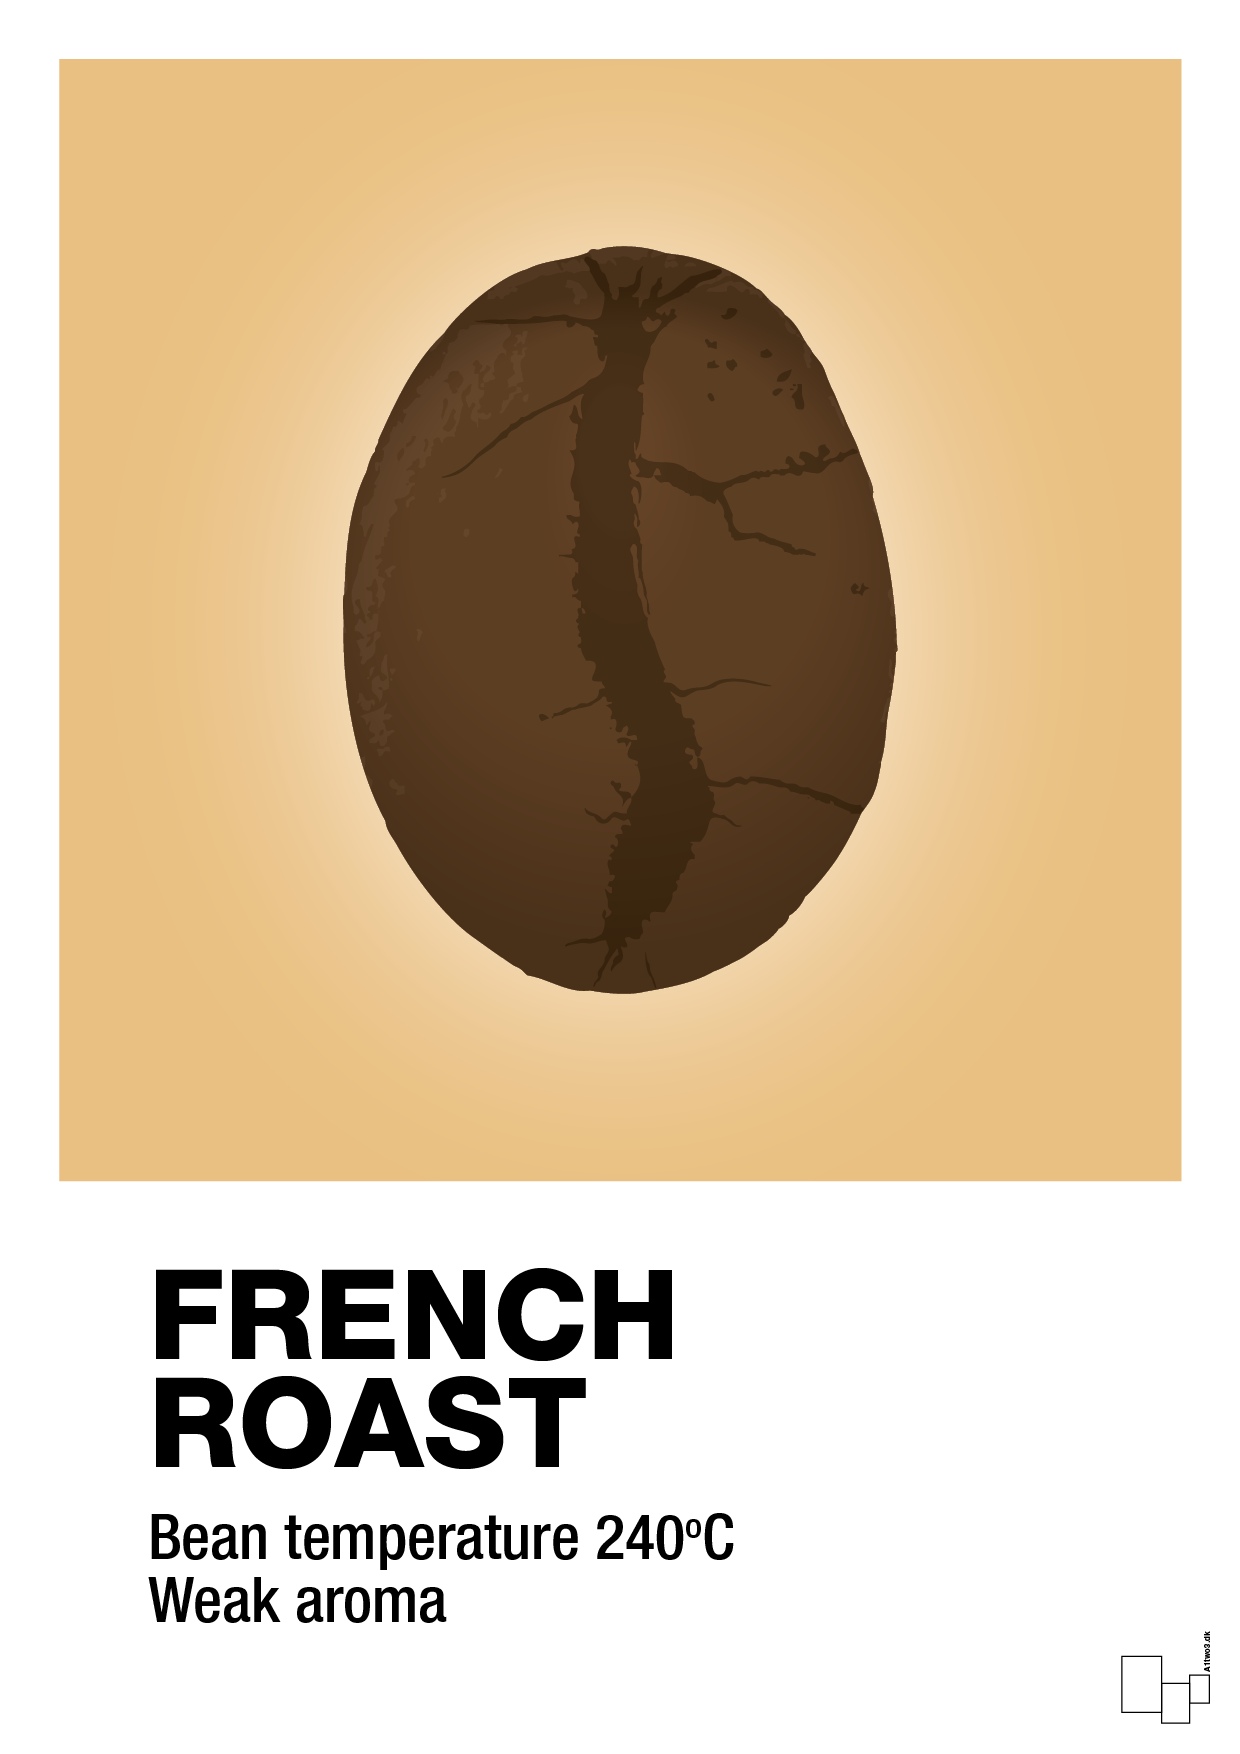 french roast - Plakat med Mad & Drikke i Charismatic